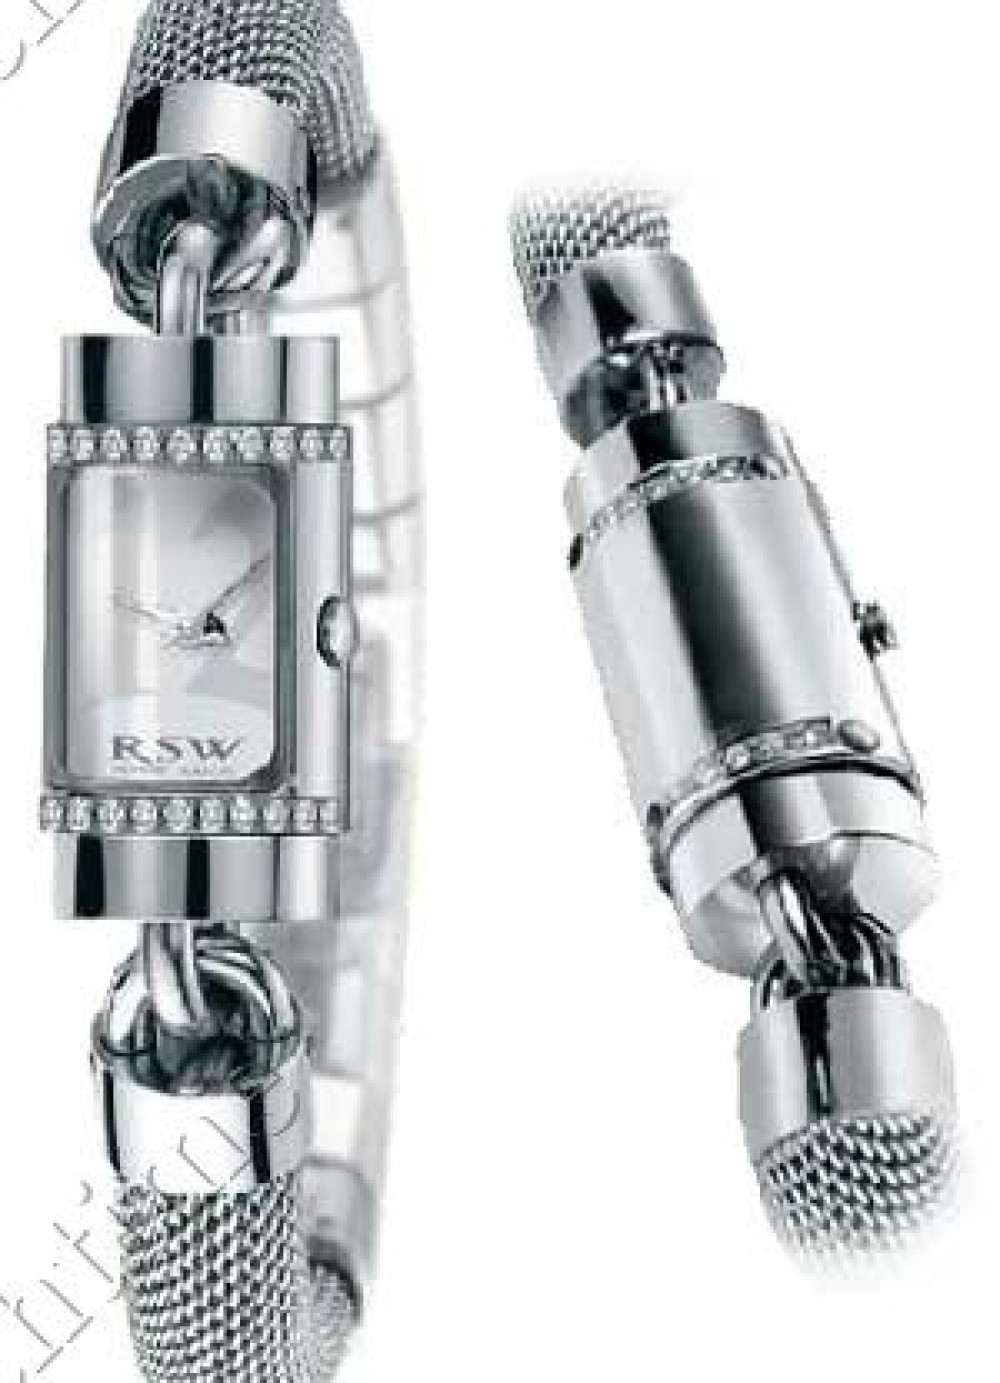 Zegarek firmy RSW - Rama Swiss Watch, model Lady Liberty